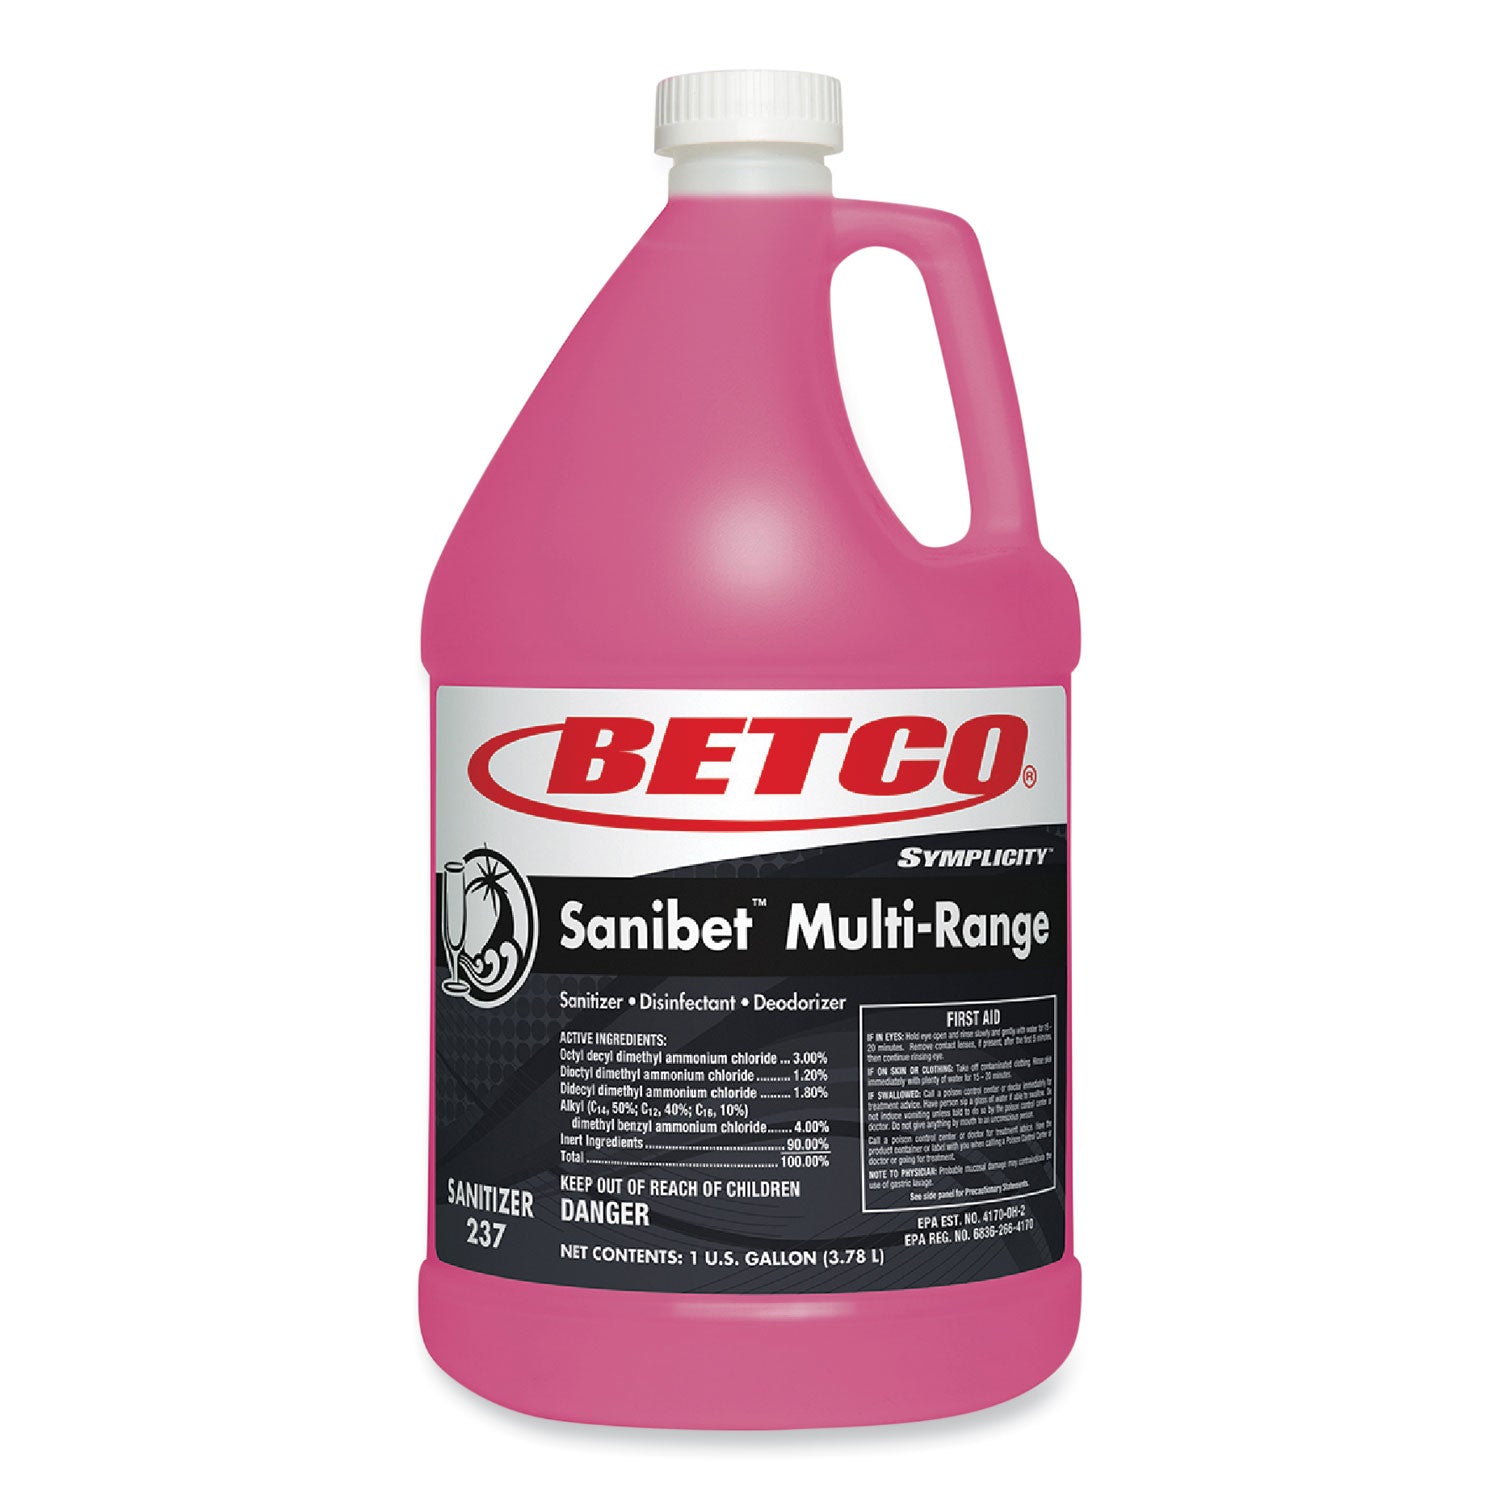 symplicity-sanibet-multi-range-sanitizer-disinfectant-deodorizer-1-gal-bottle-4-carton_bet2370400 - 1